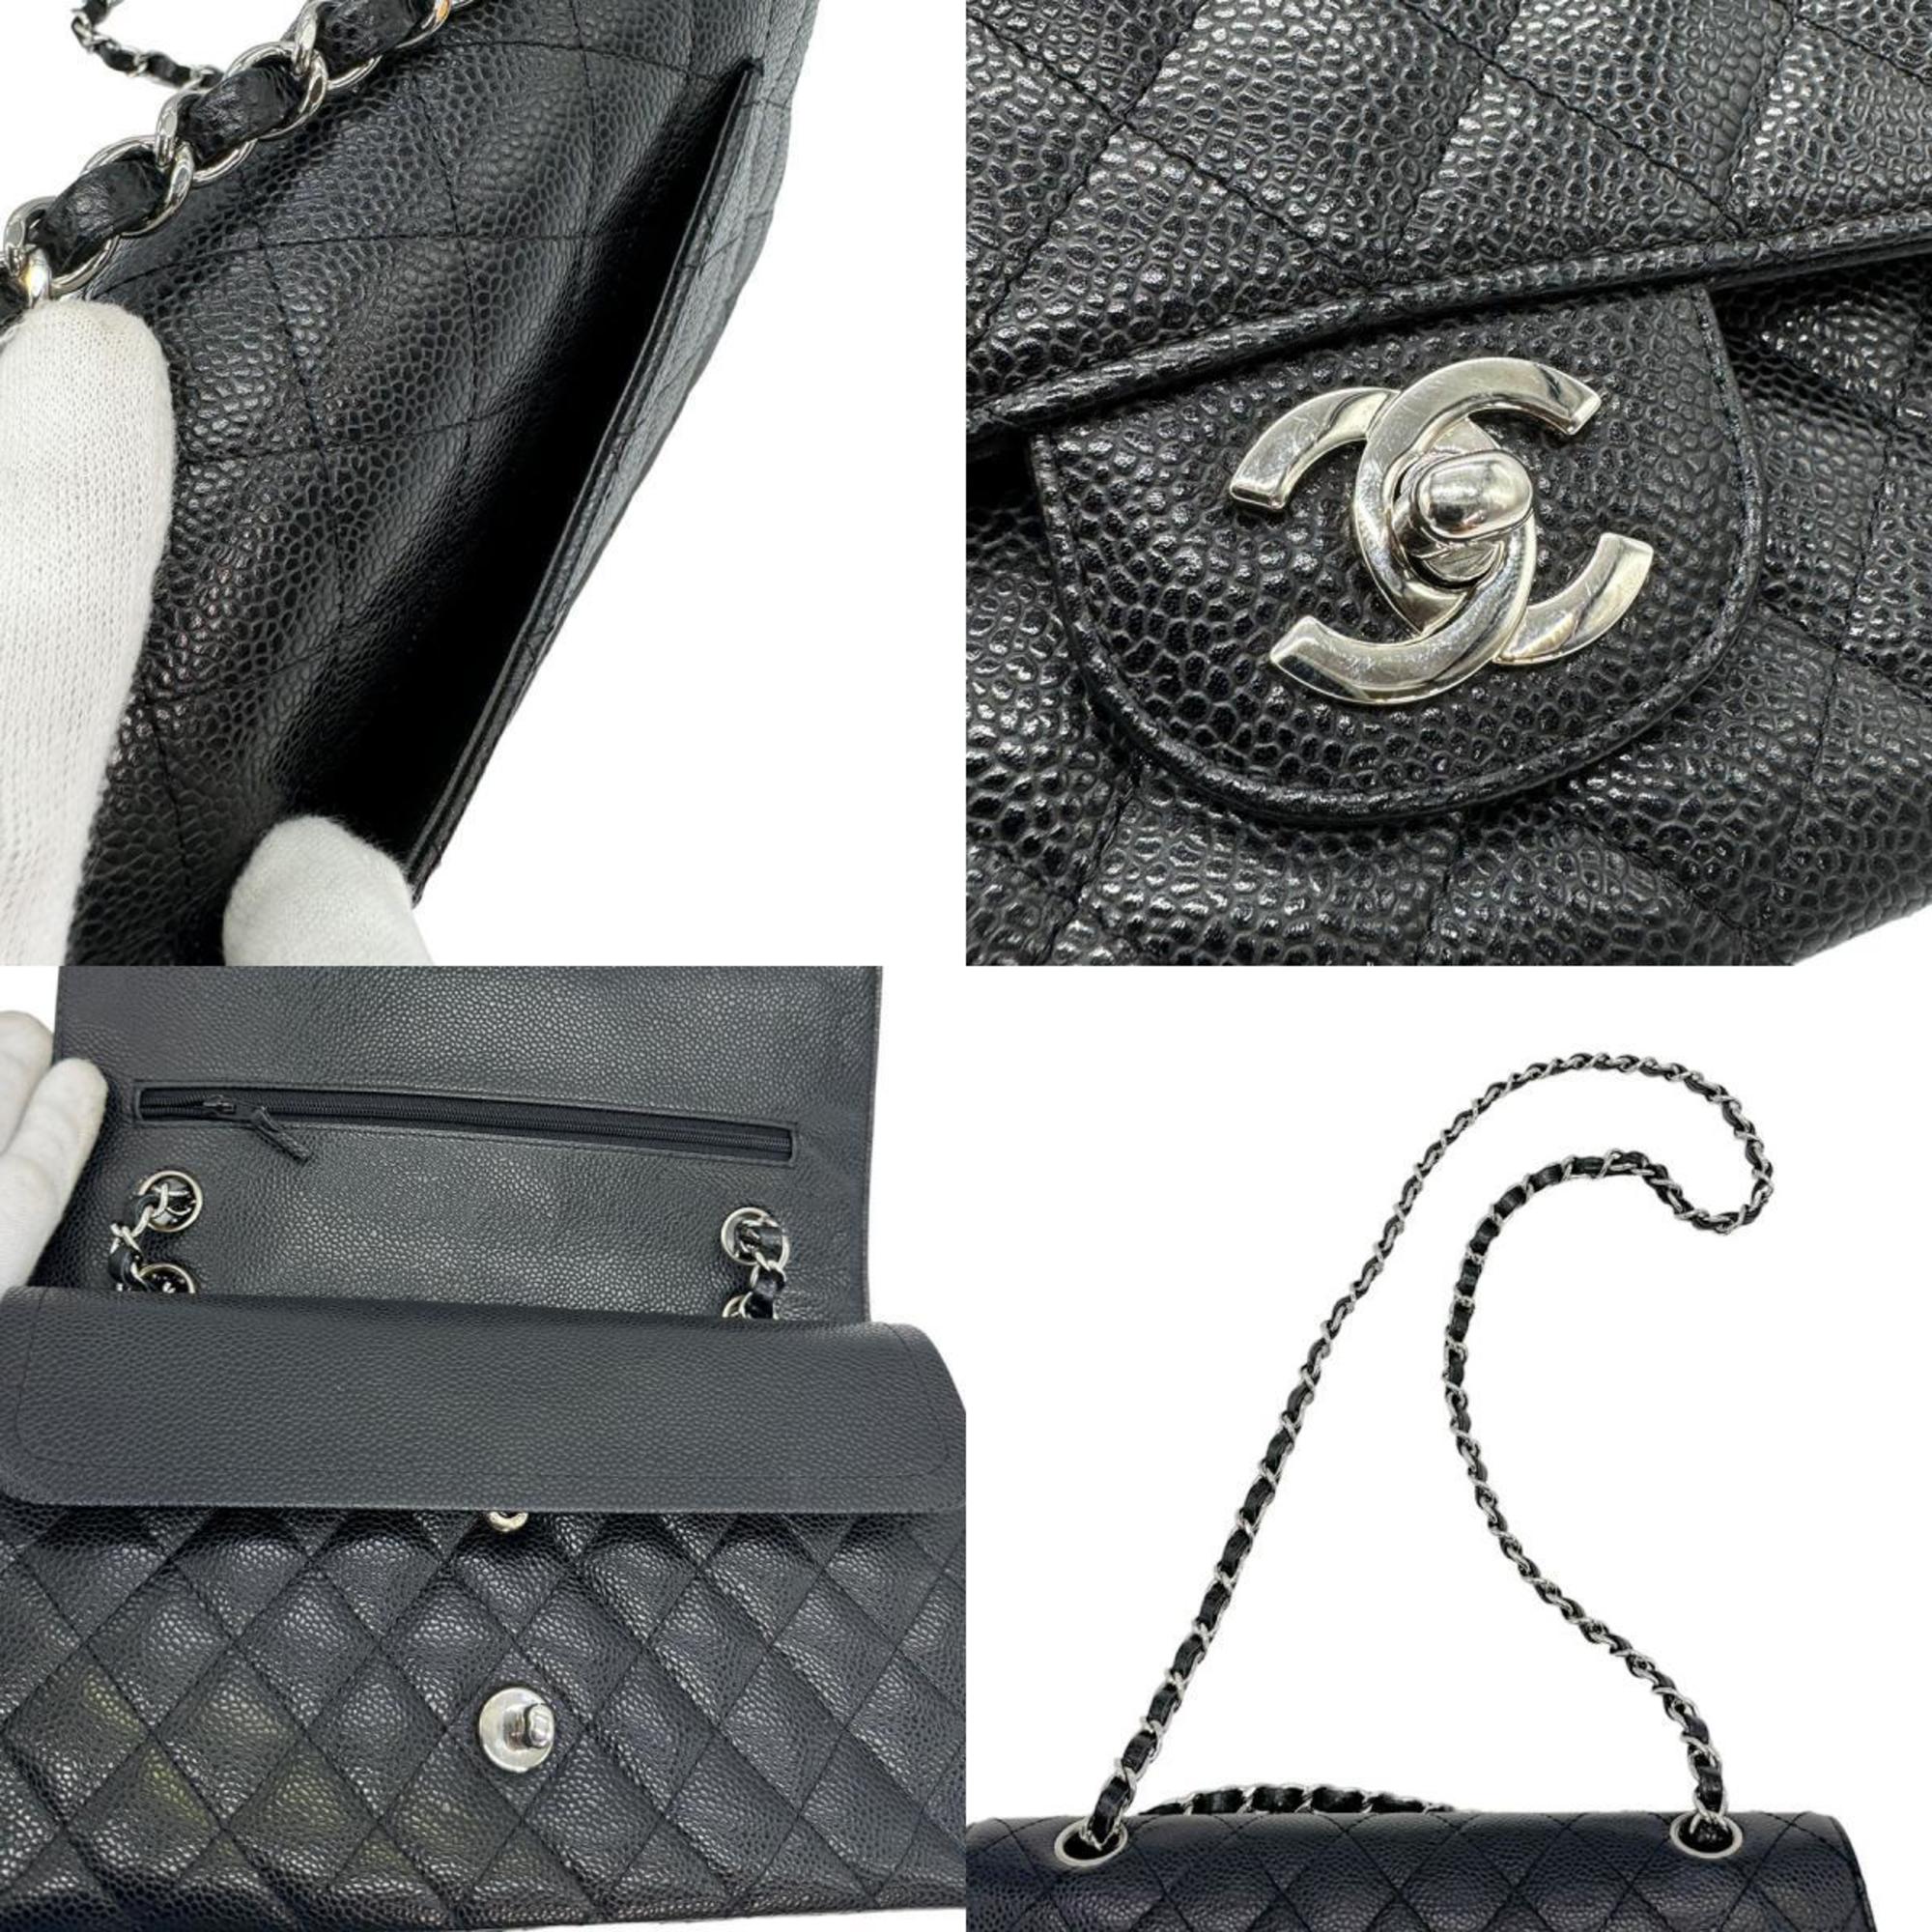 CHANEL Shoulder Bag Matelasse Caviar Skin Leather Black Silver Women's z0568